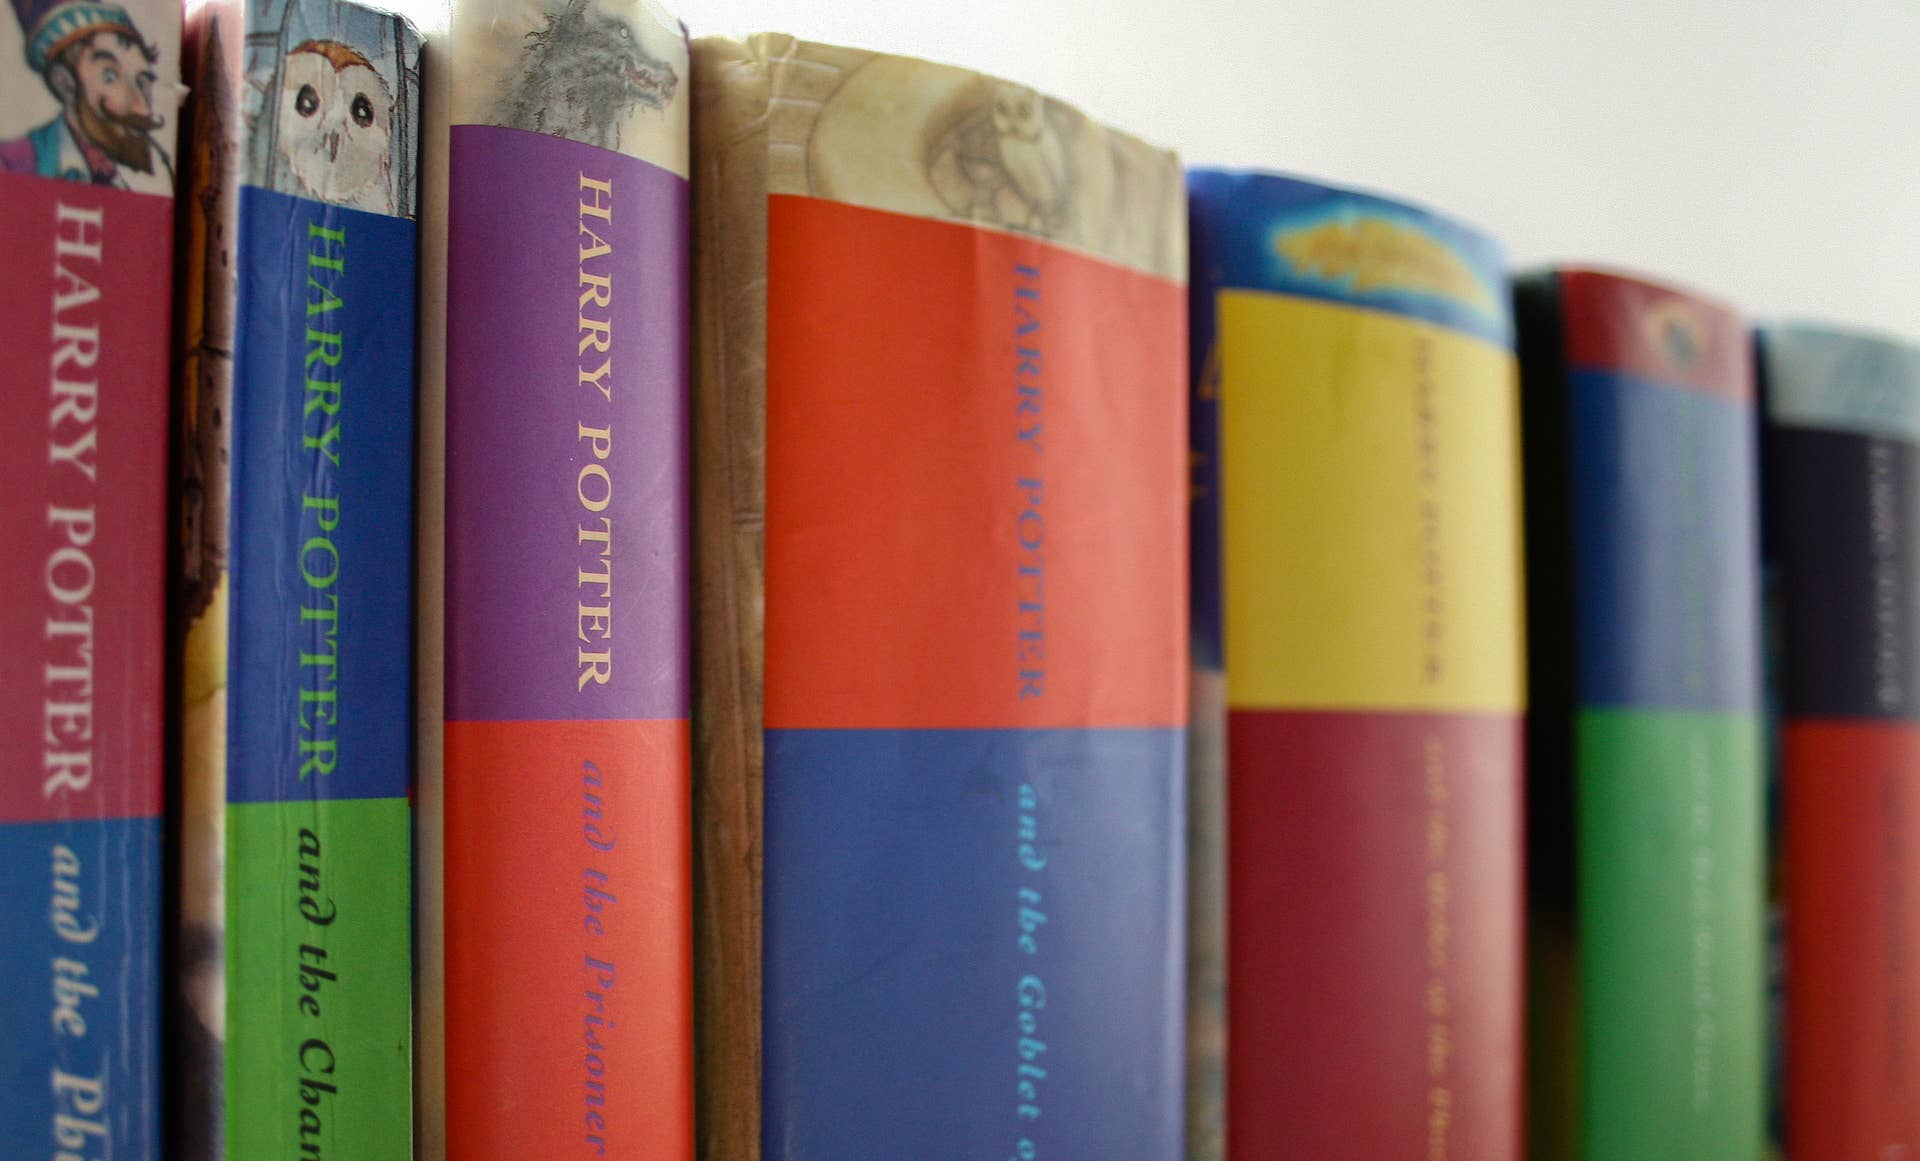 Harry Potter books lined up together